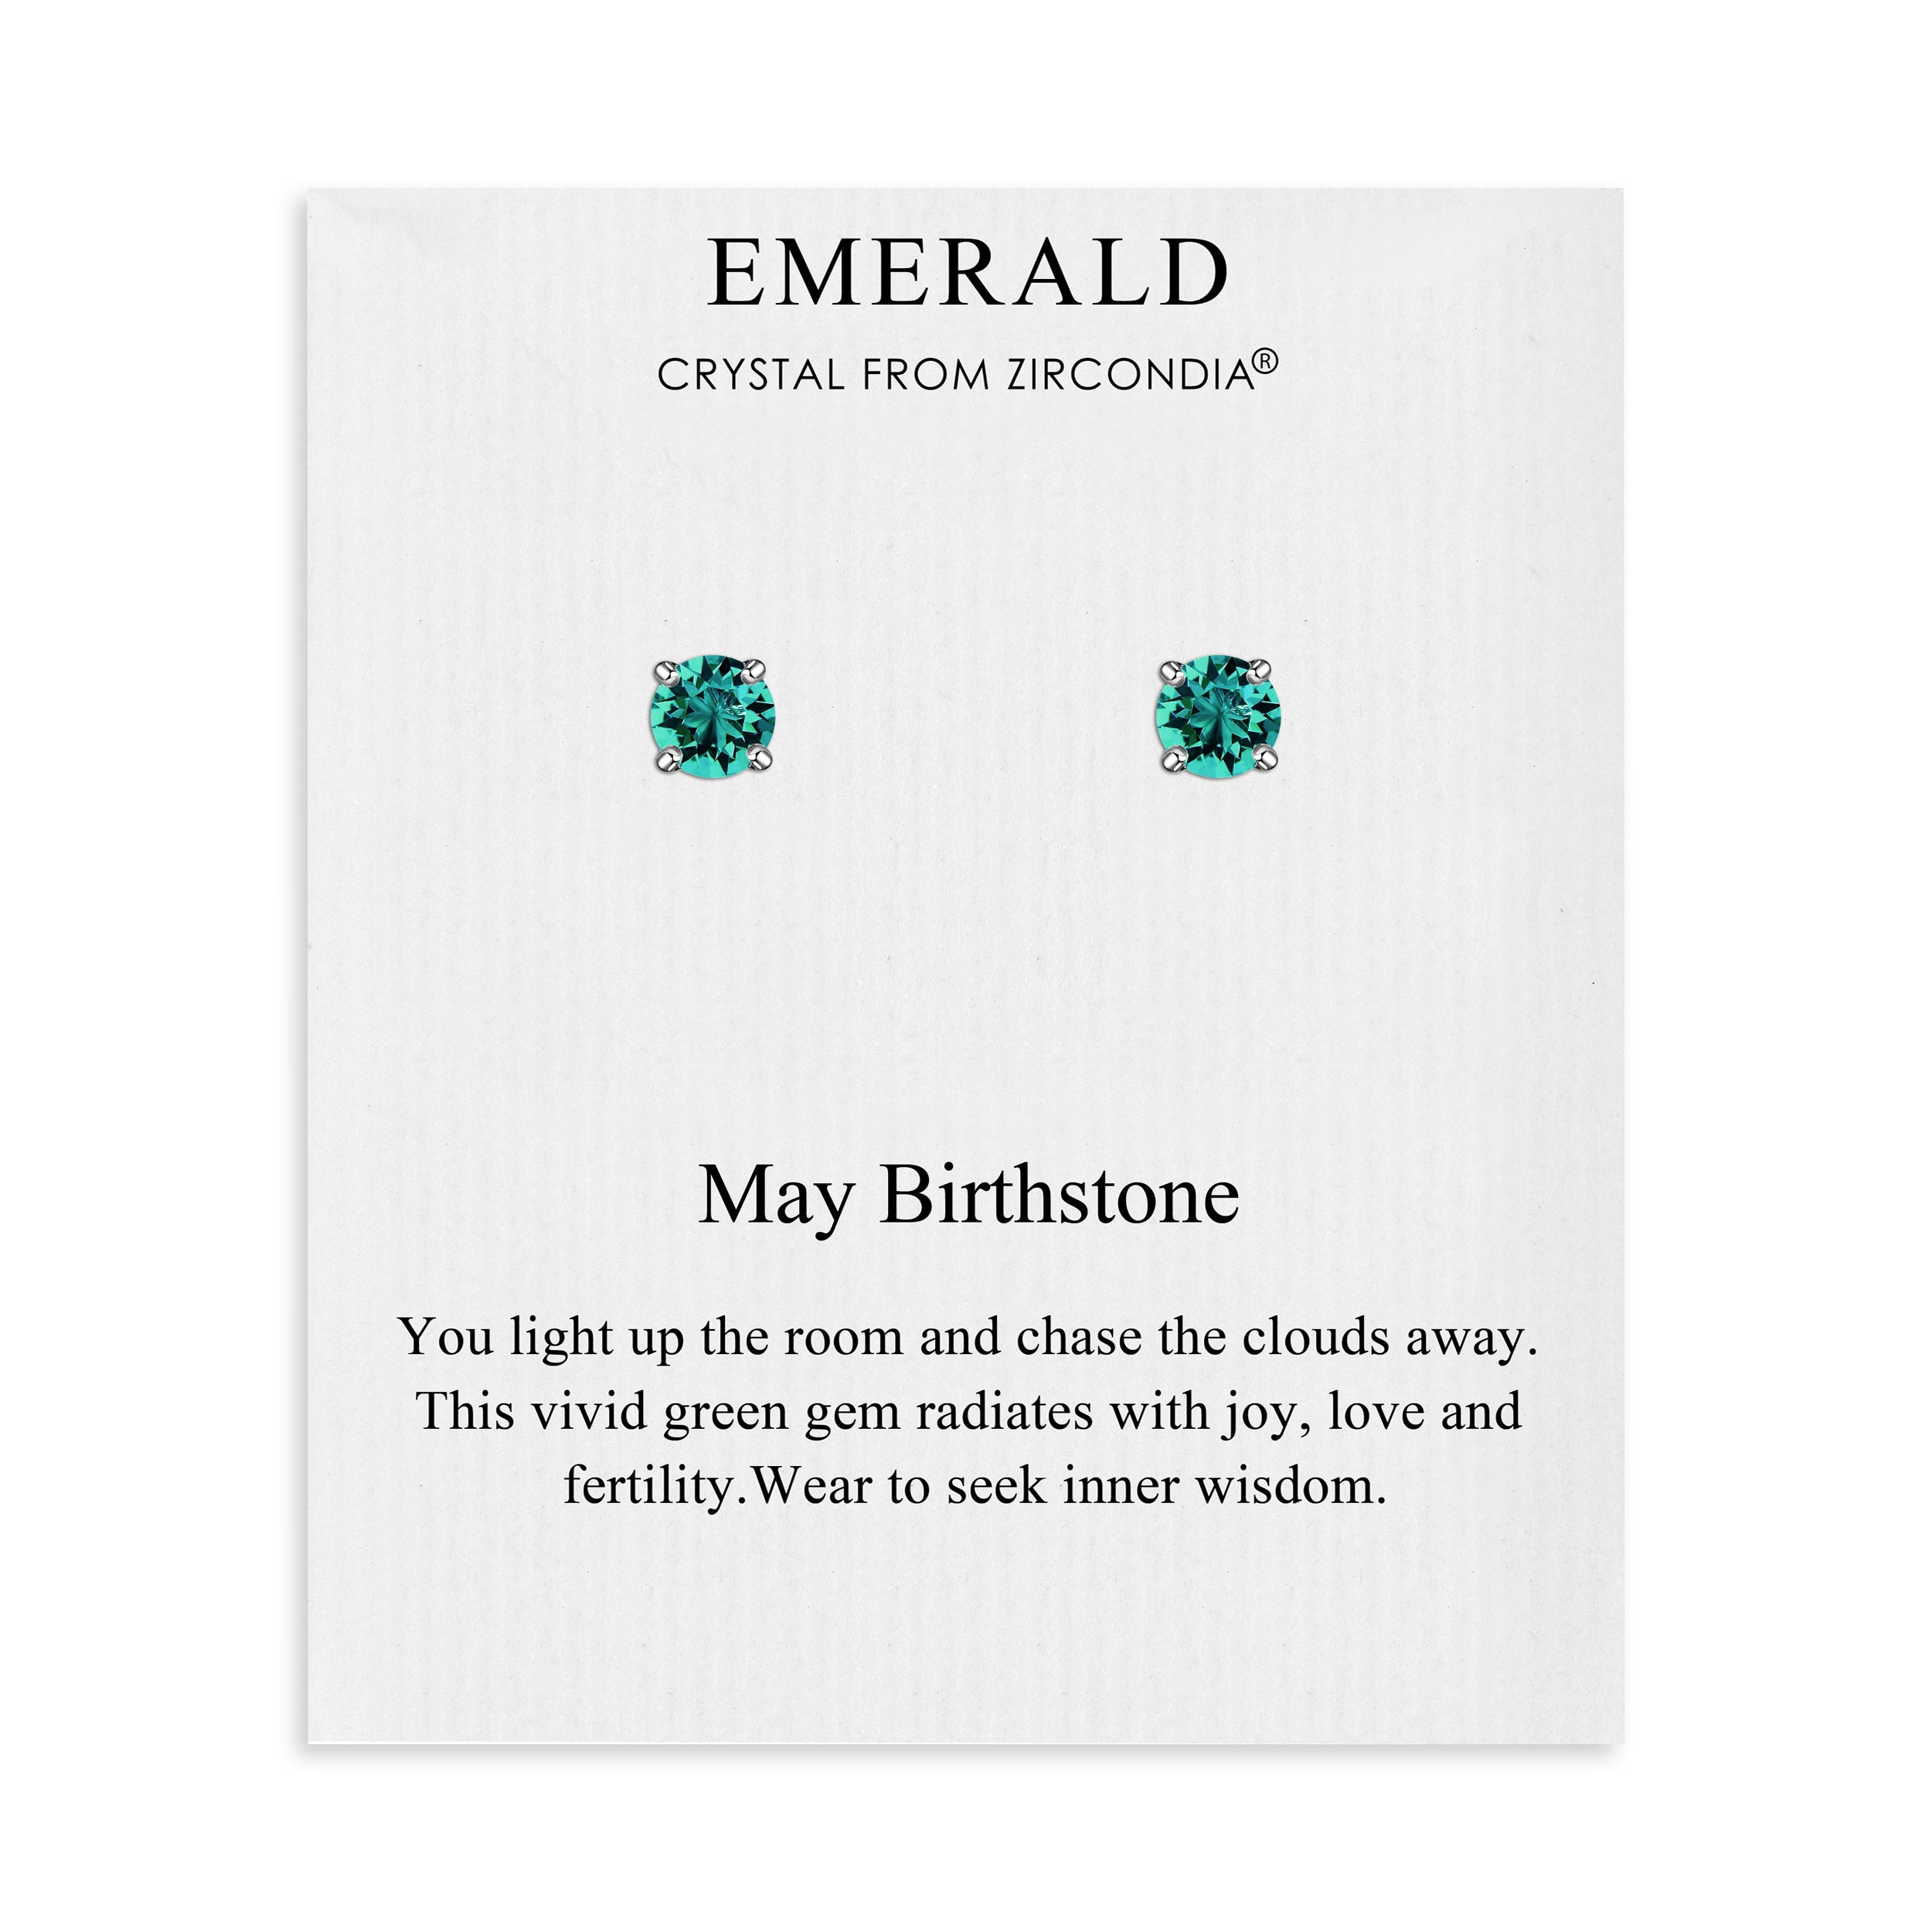 May (Emerald) Birthstone Earrings Created with Zircondia® Crystals by Philip Jones Jewellery